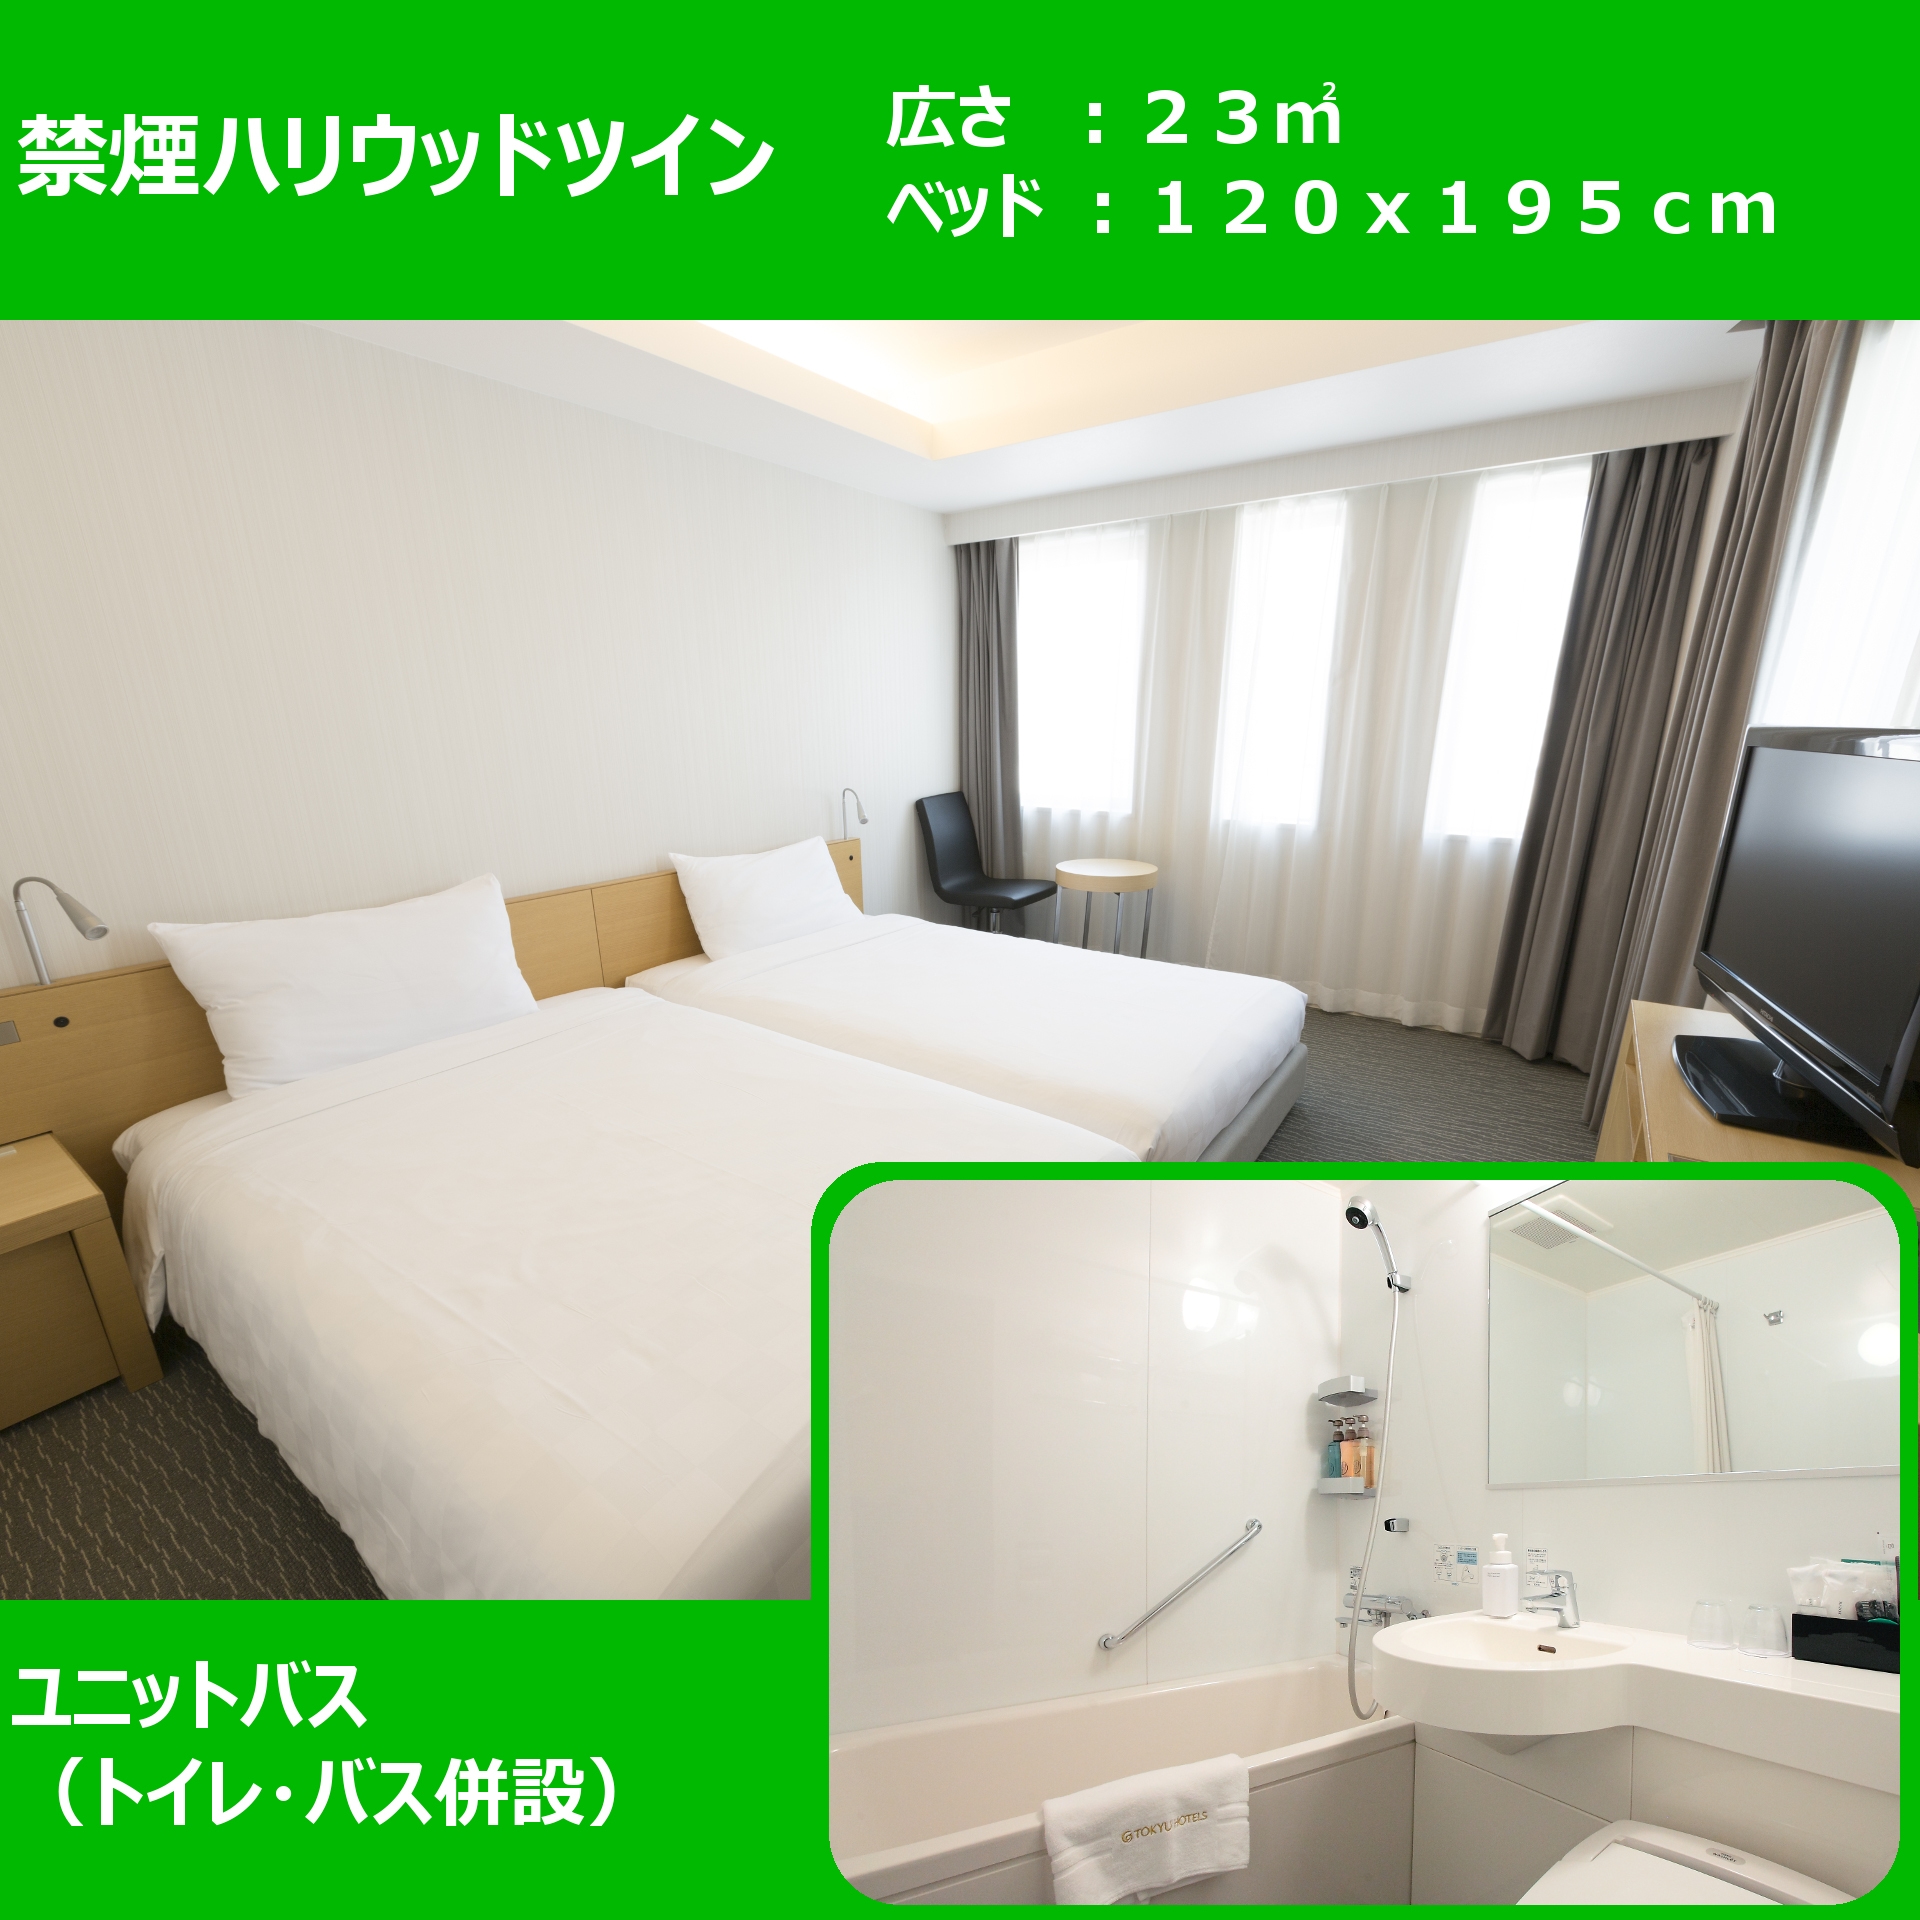 Non-smoking Hollywood Twin ■ 22.6 sqm, bed width 120 cm ■ Unit bath